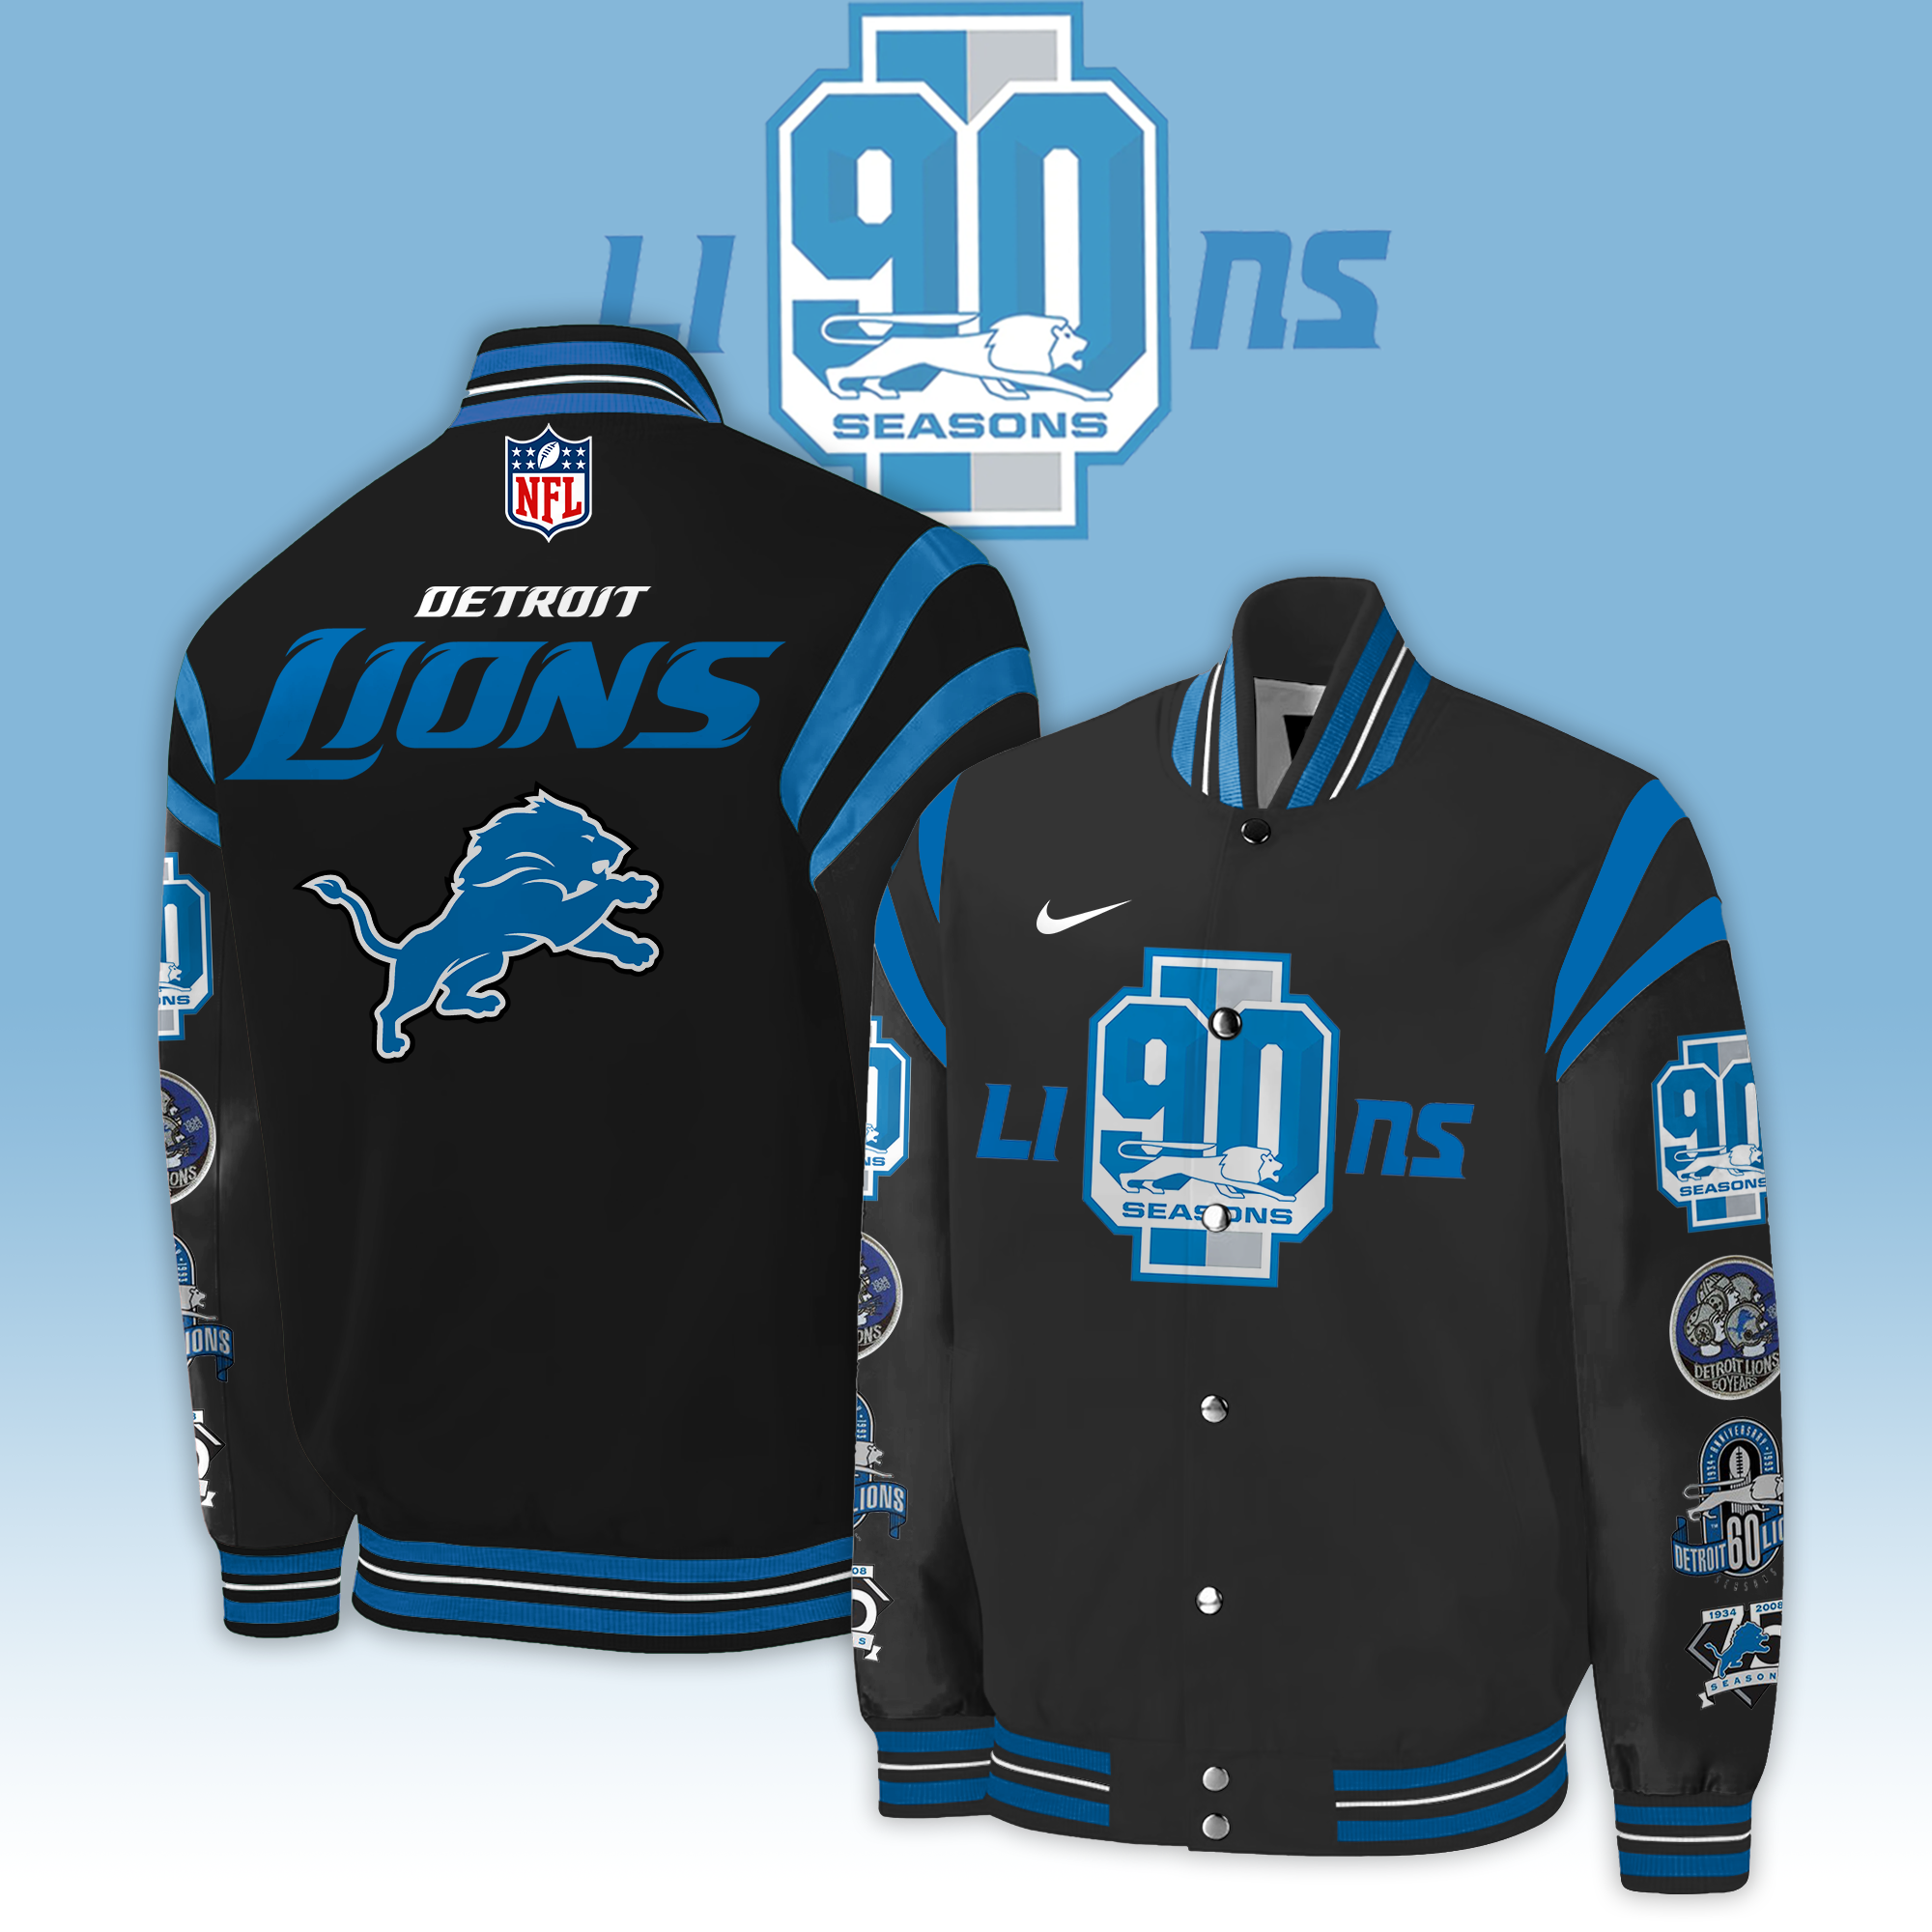 Maker of Jacket NFL Detroit Lions Light Blue and White Varsity